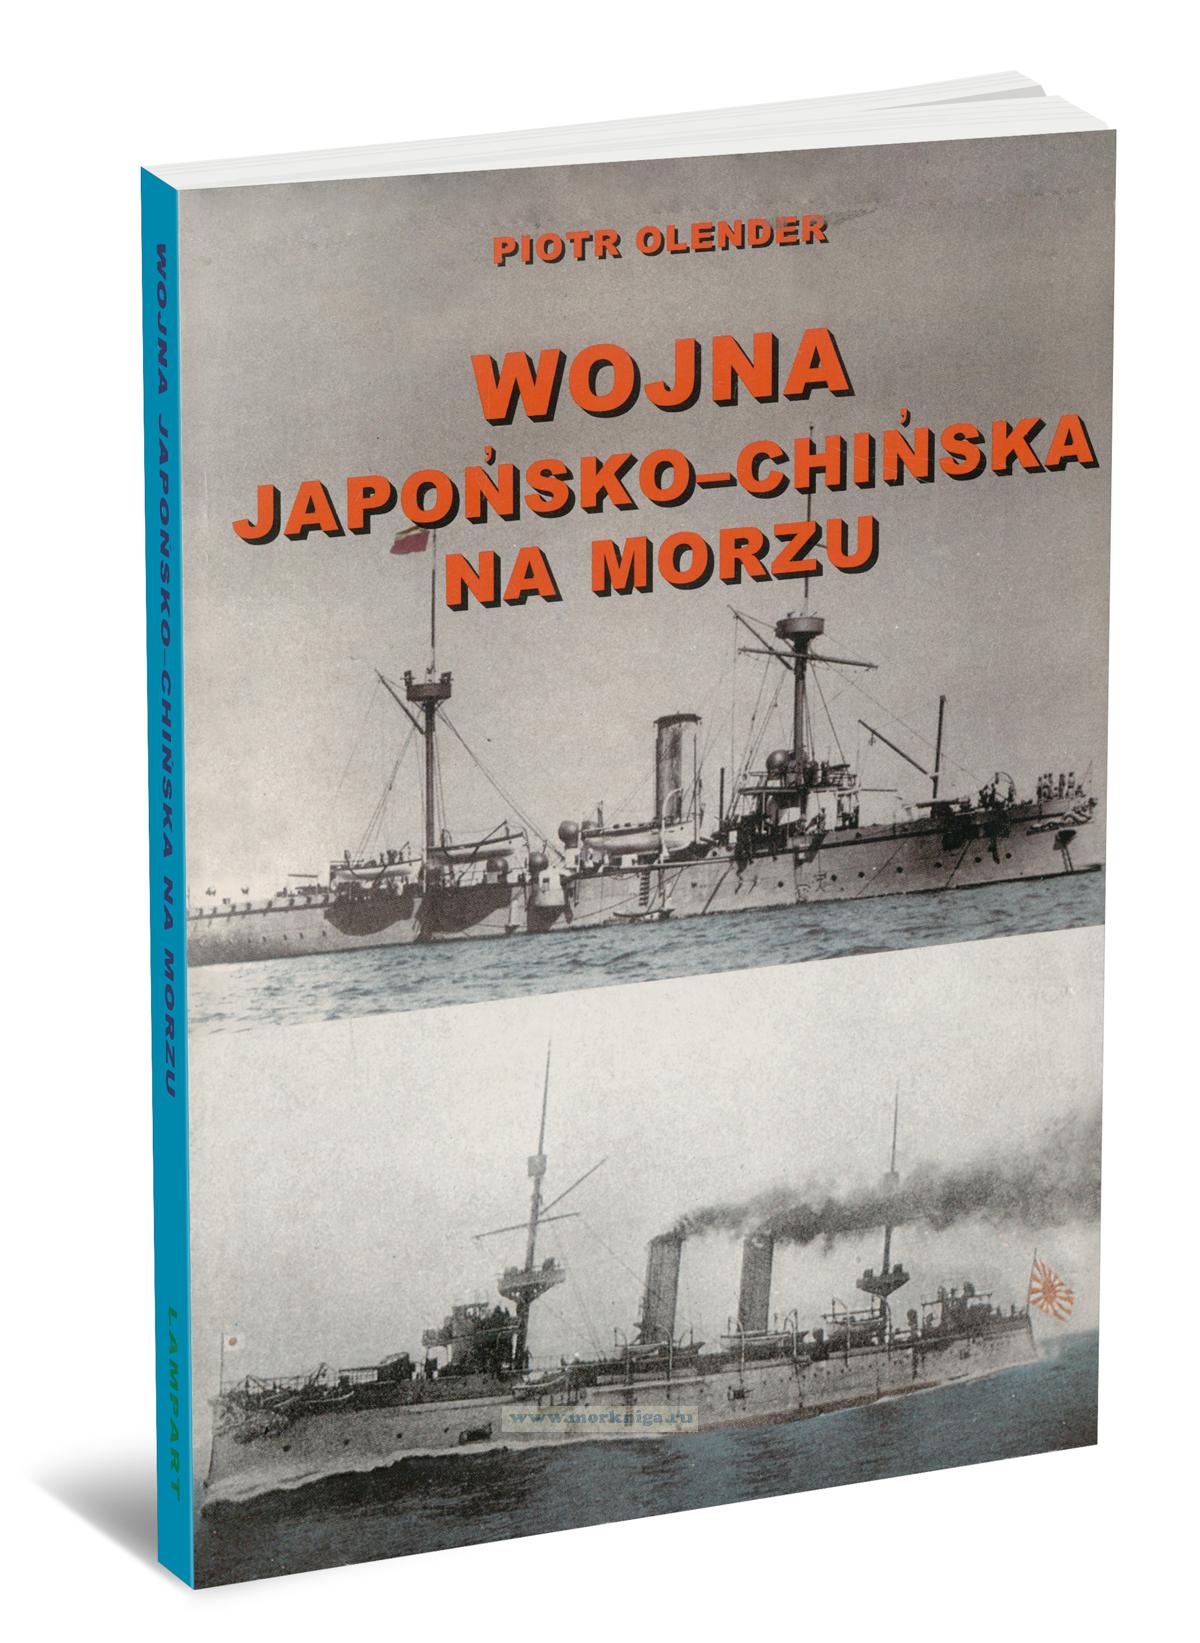 Wojna Japonsko-Chinska na morzu/Японско-китайская война на море